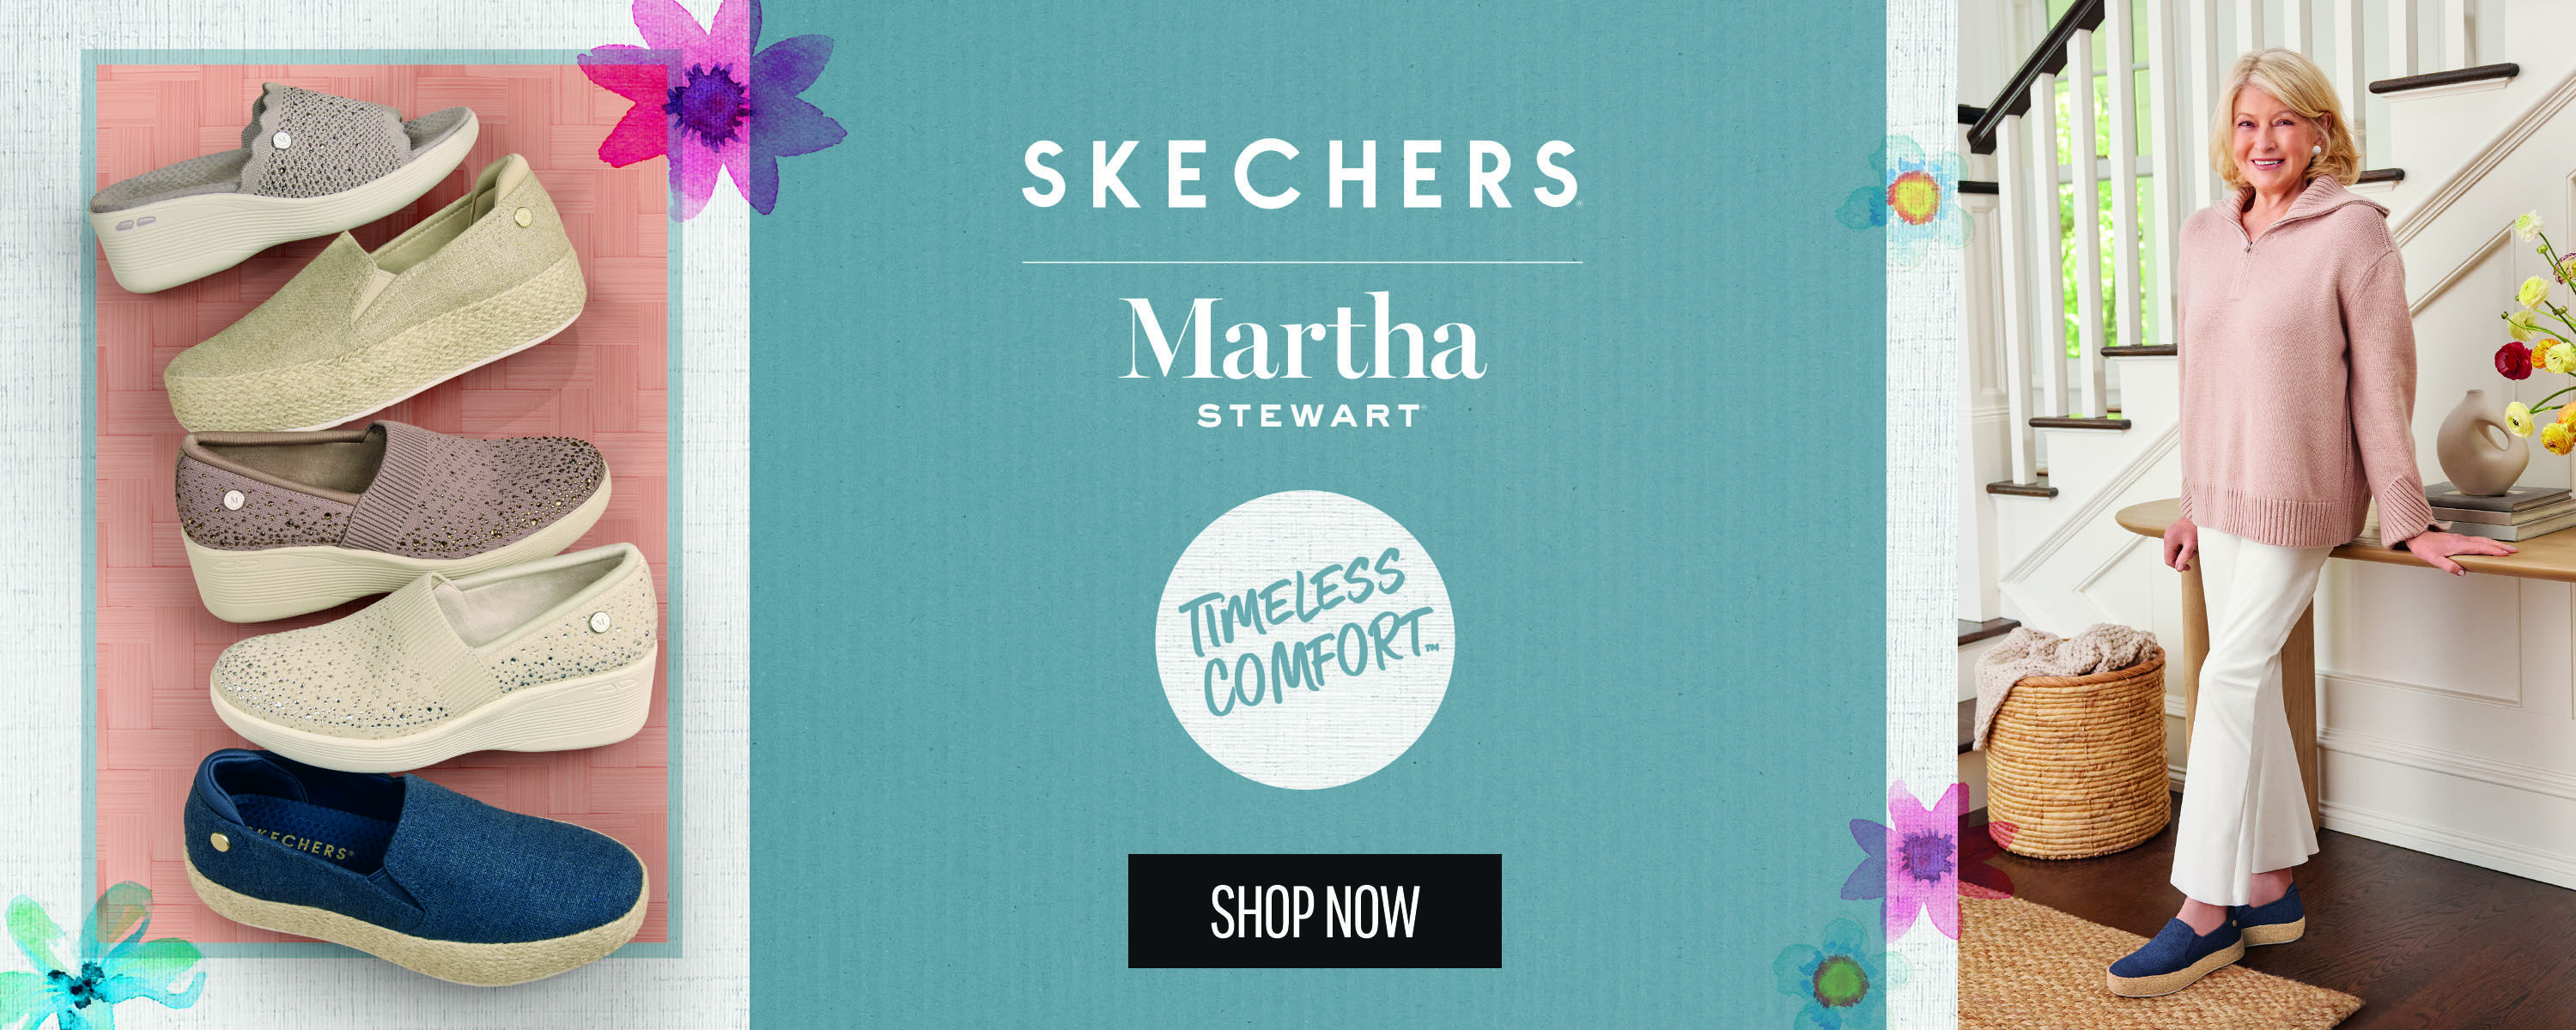 Skechers Martha Stewart "Timeless Comfort" - SHOP NOW